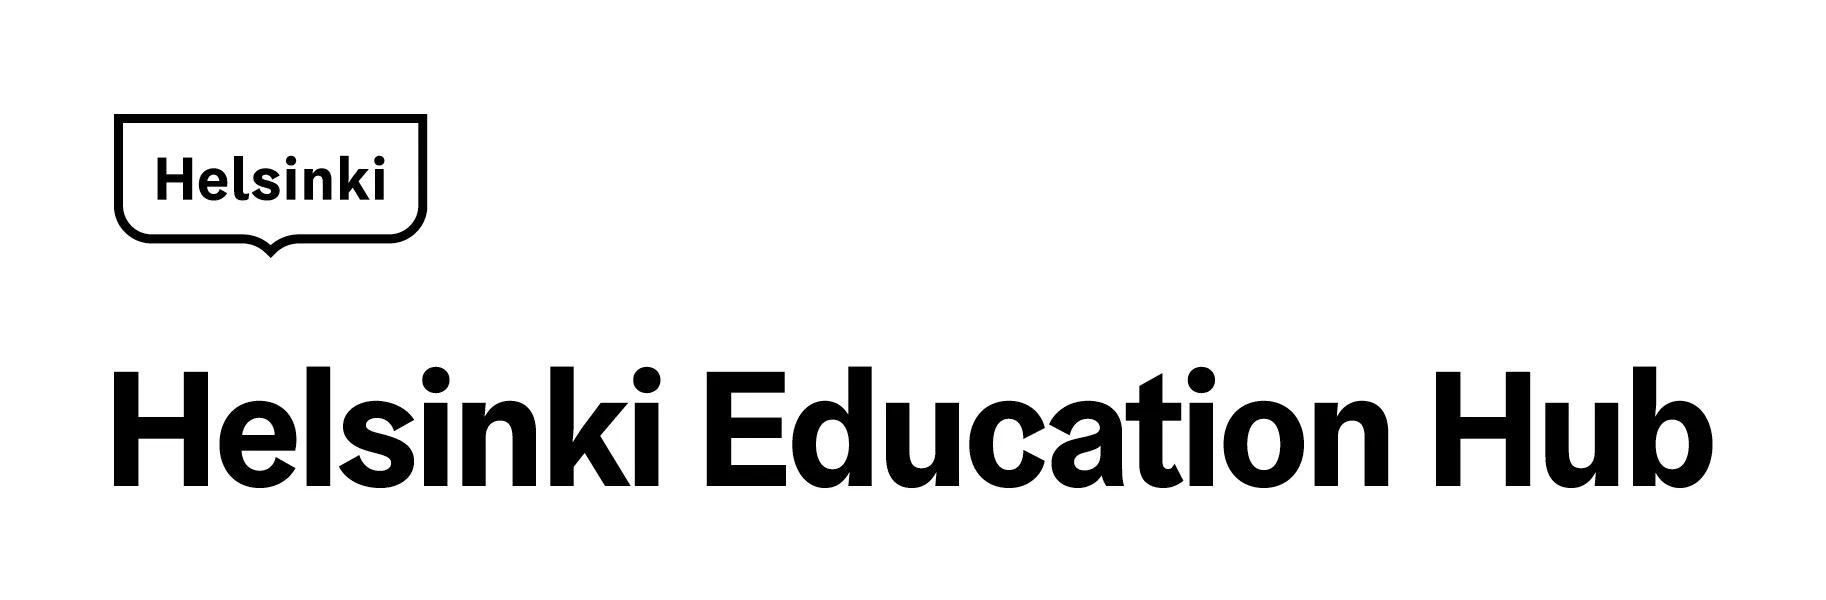 Helsinki Education Hub_Logo_Helsinki